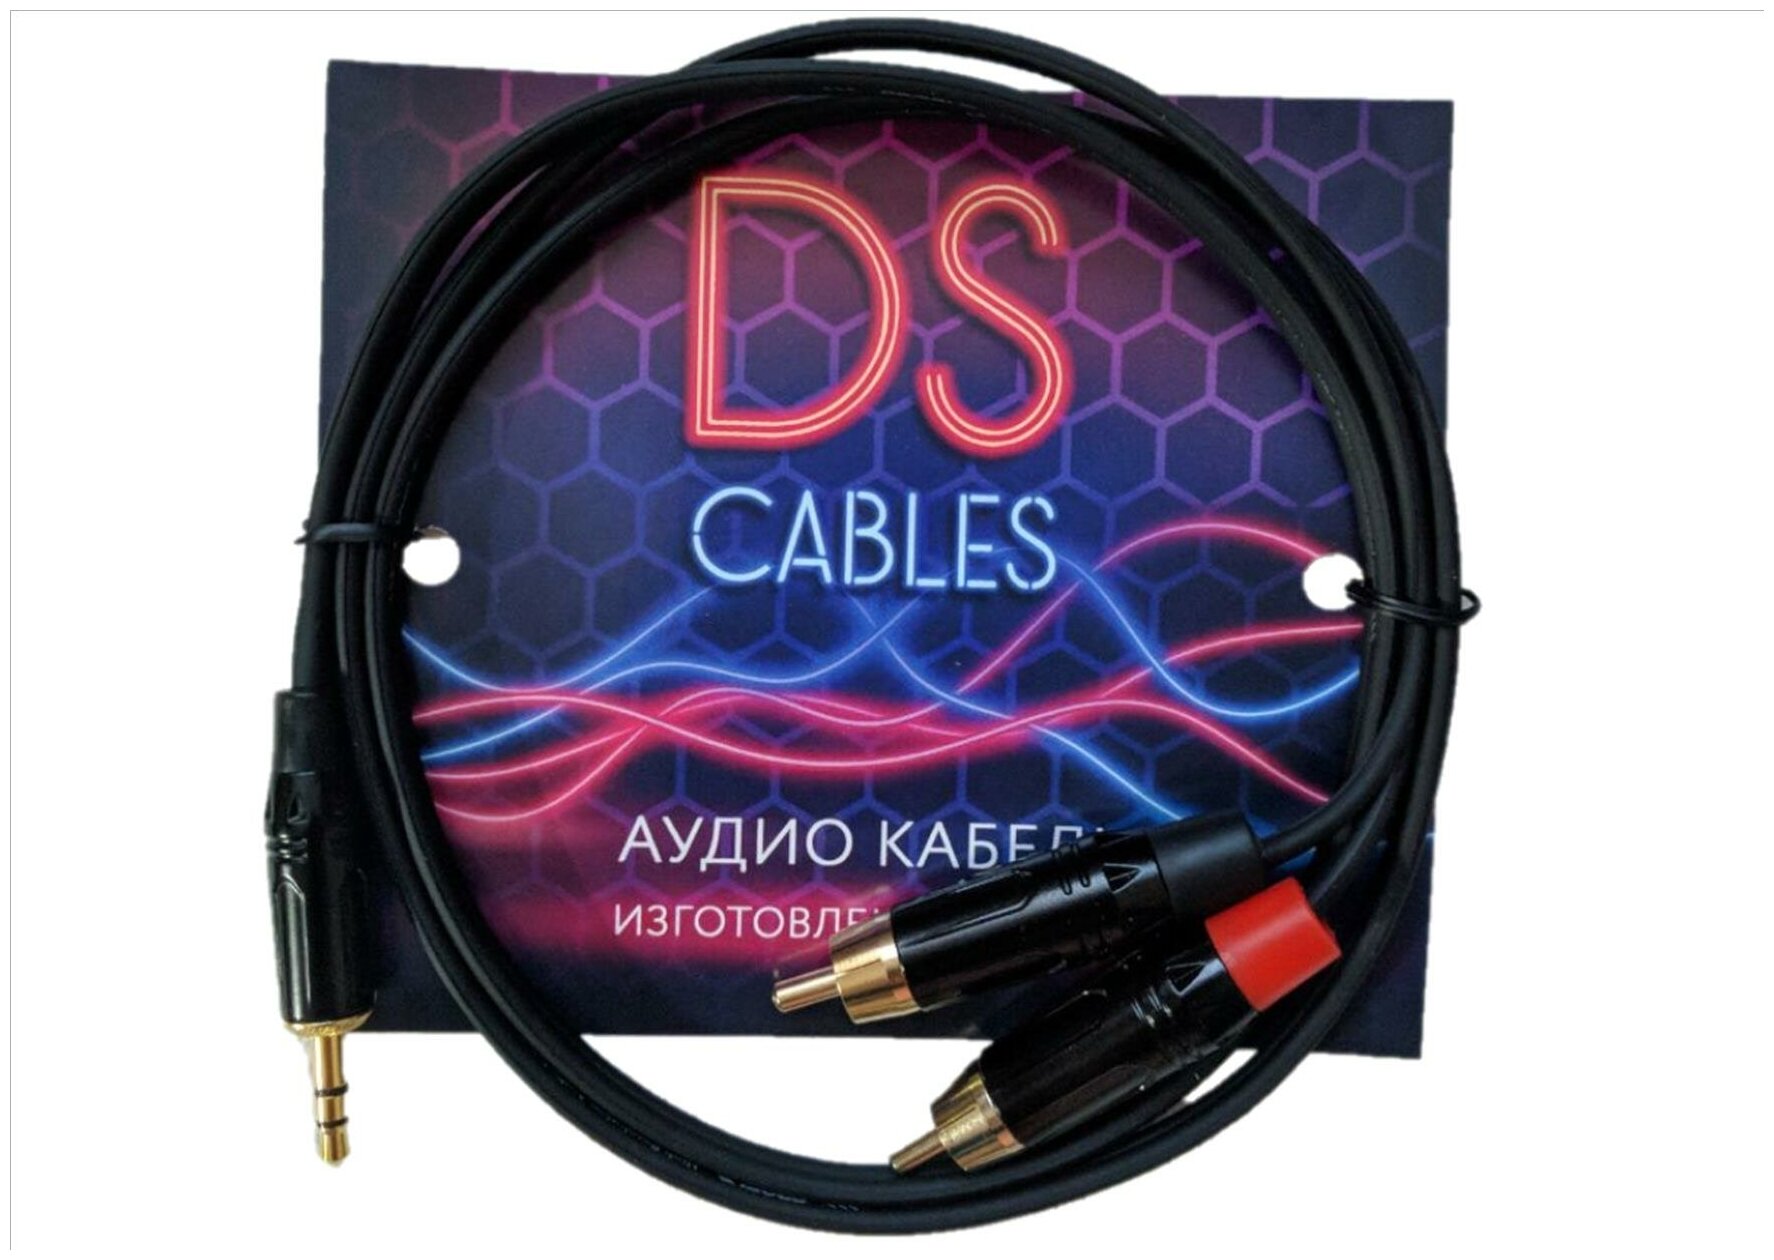 DS-кабель MRC1 кабель miniJack (3.5 mm) - 2 RCA, длина 1 м.